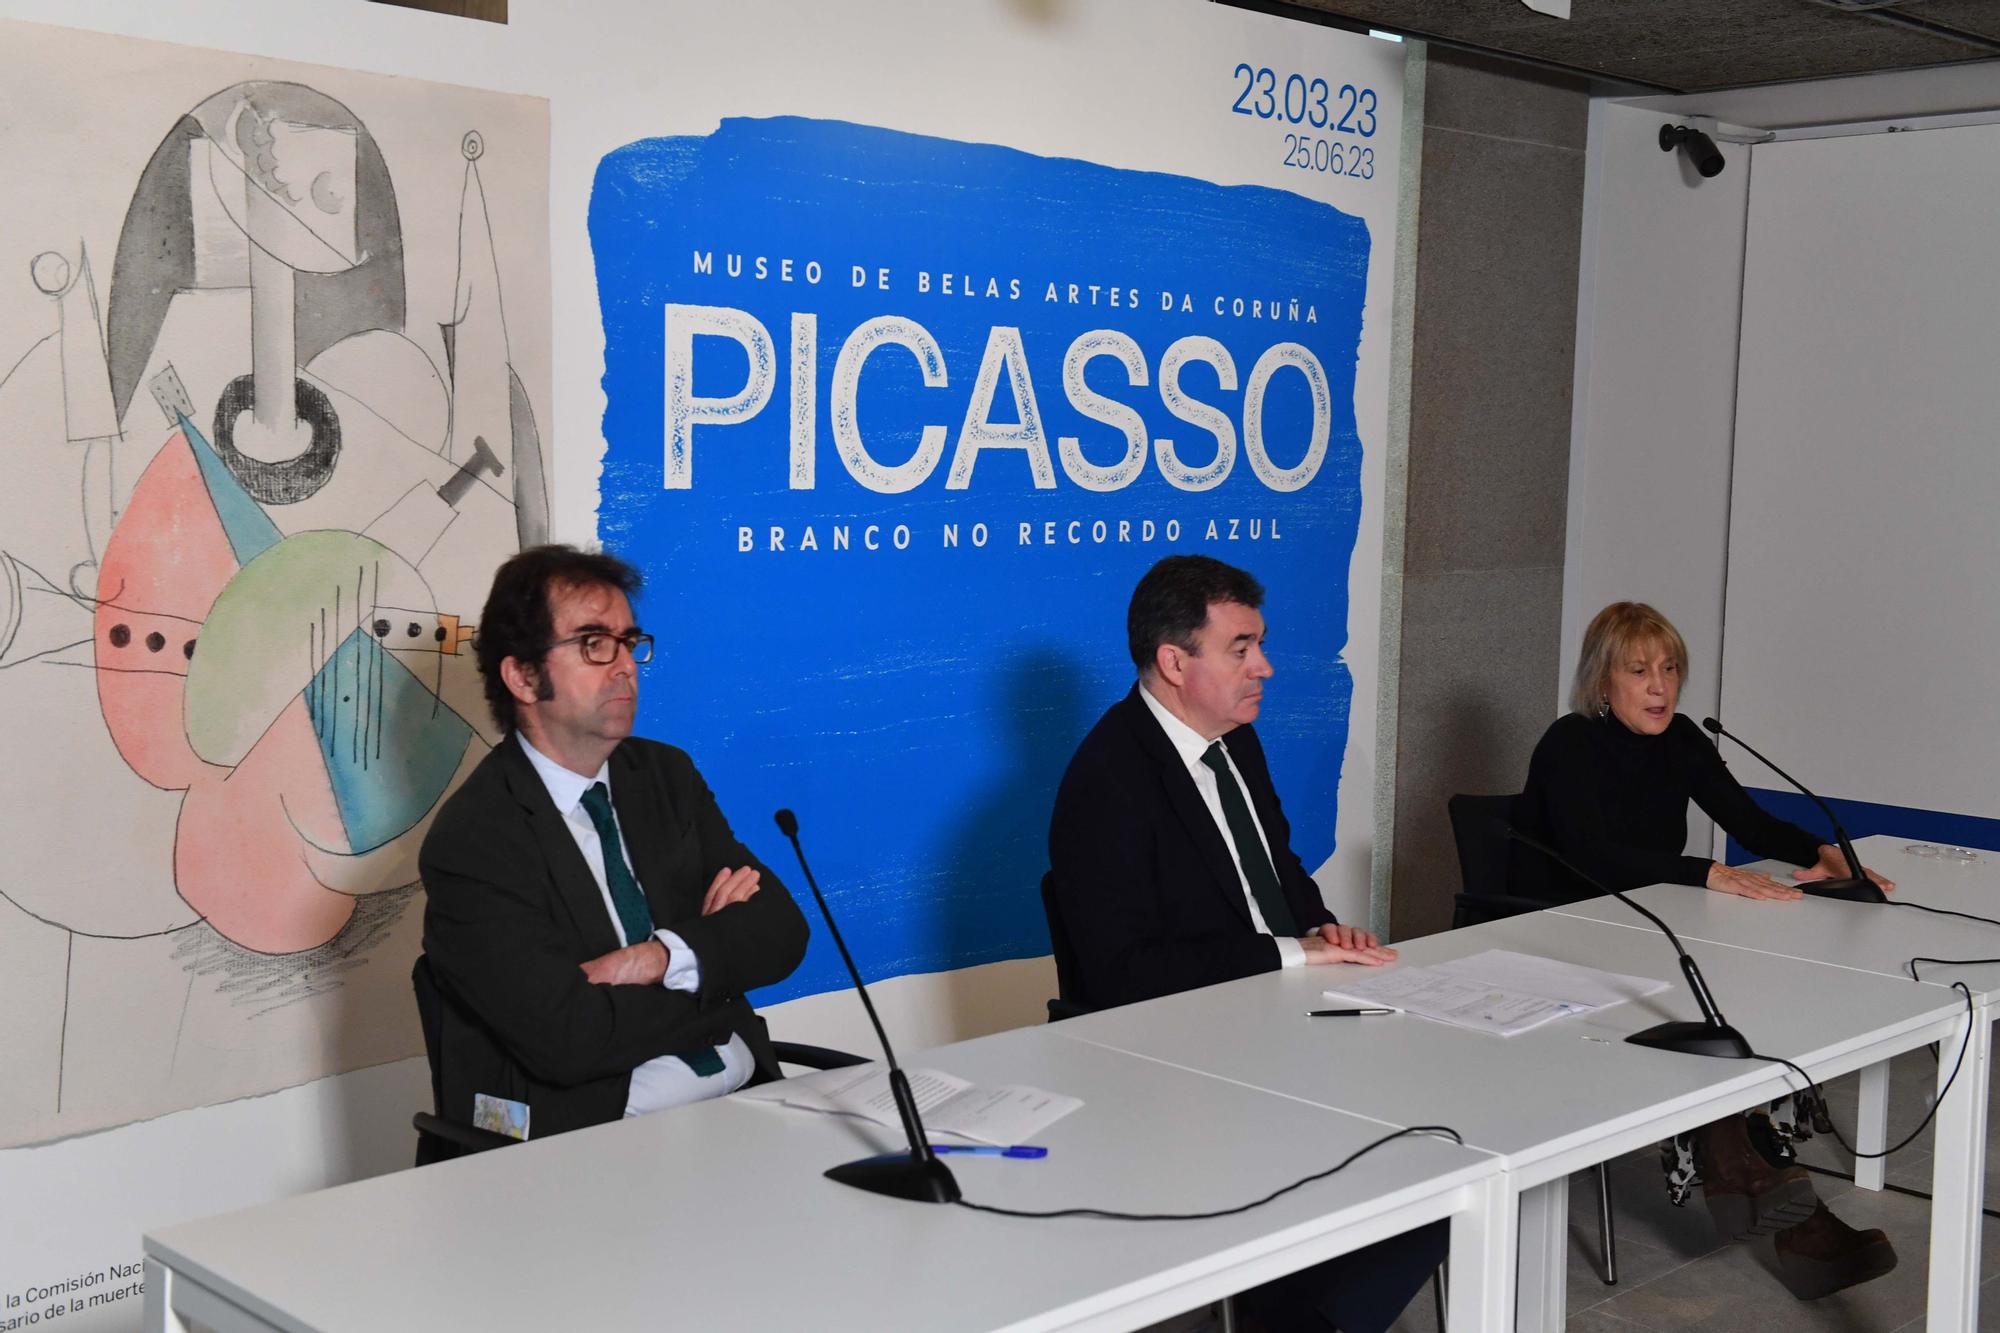 Presentación en A Coruña de la exposición 'Picasso branco no recordo azul'